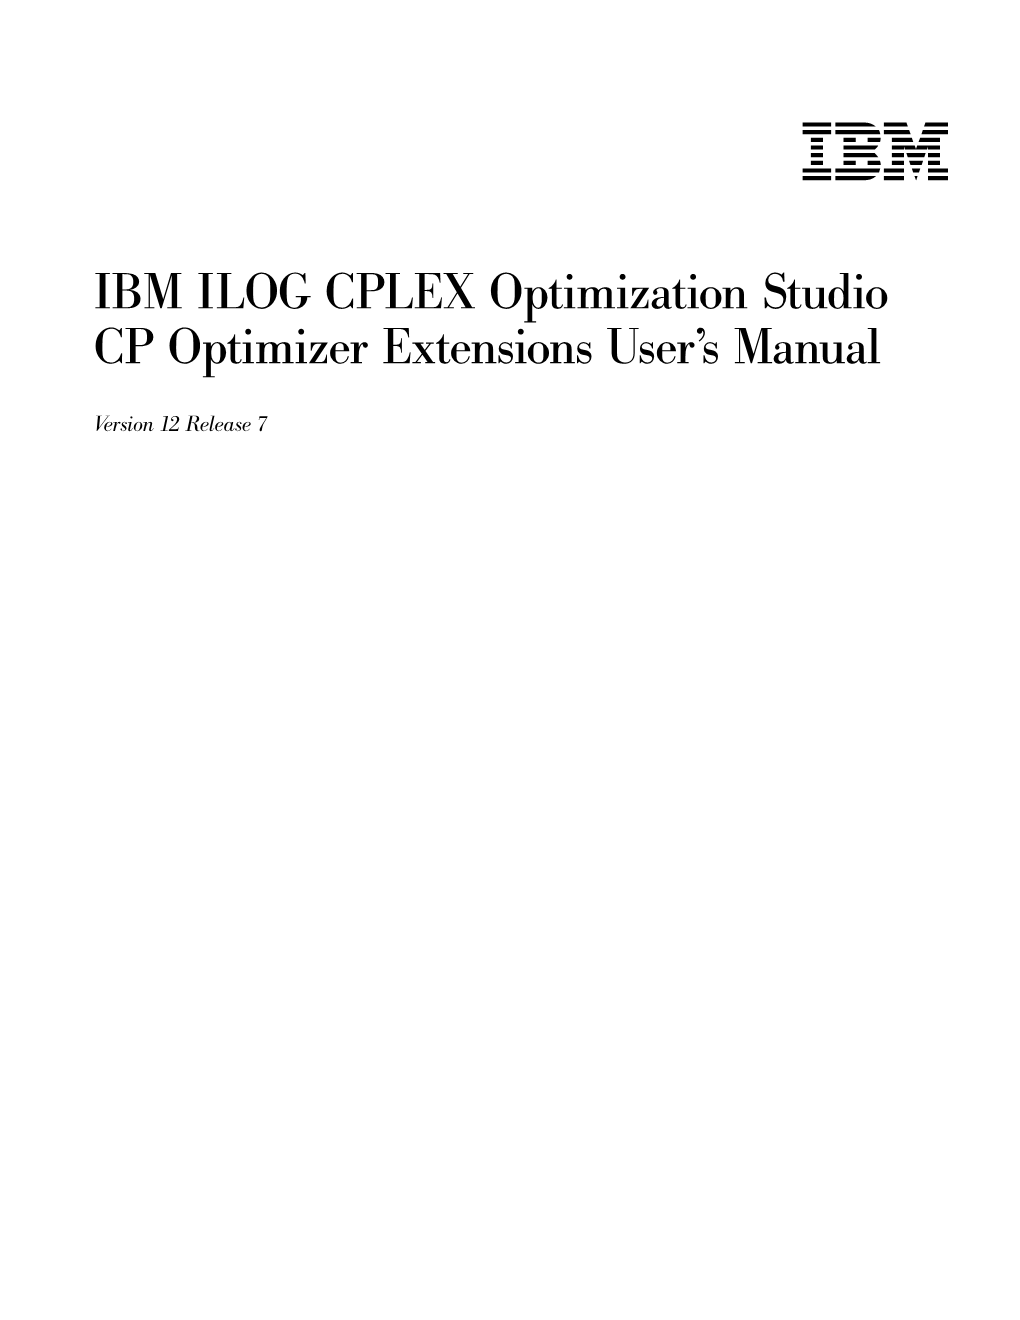 CP Optimizer Extensions User S Manual